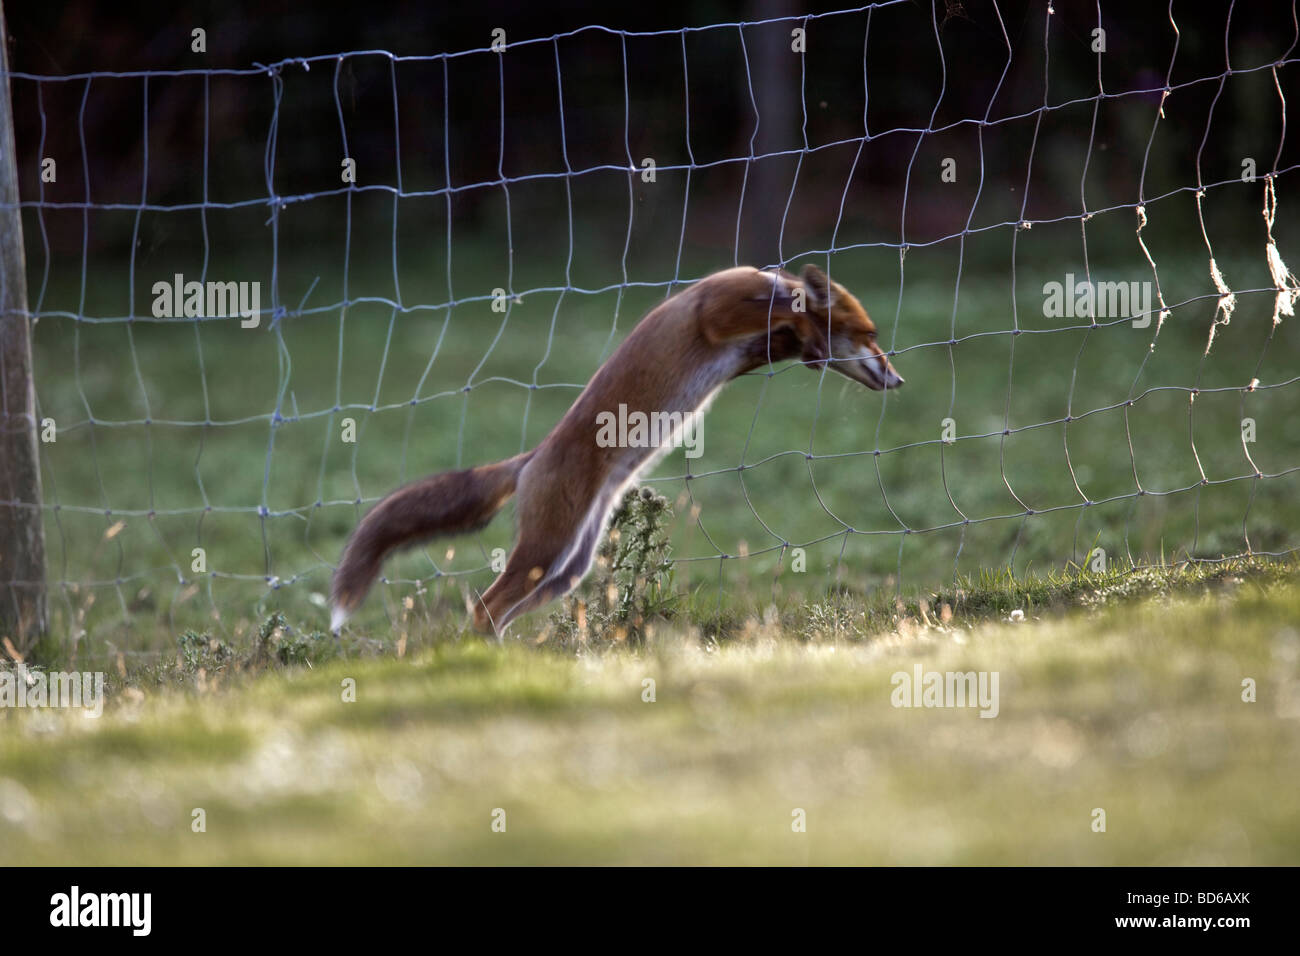 fox Vulpes vulpes cornwall jumping through a fence Stock Photo